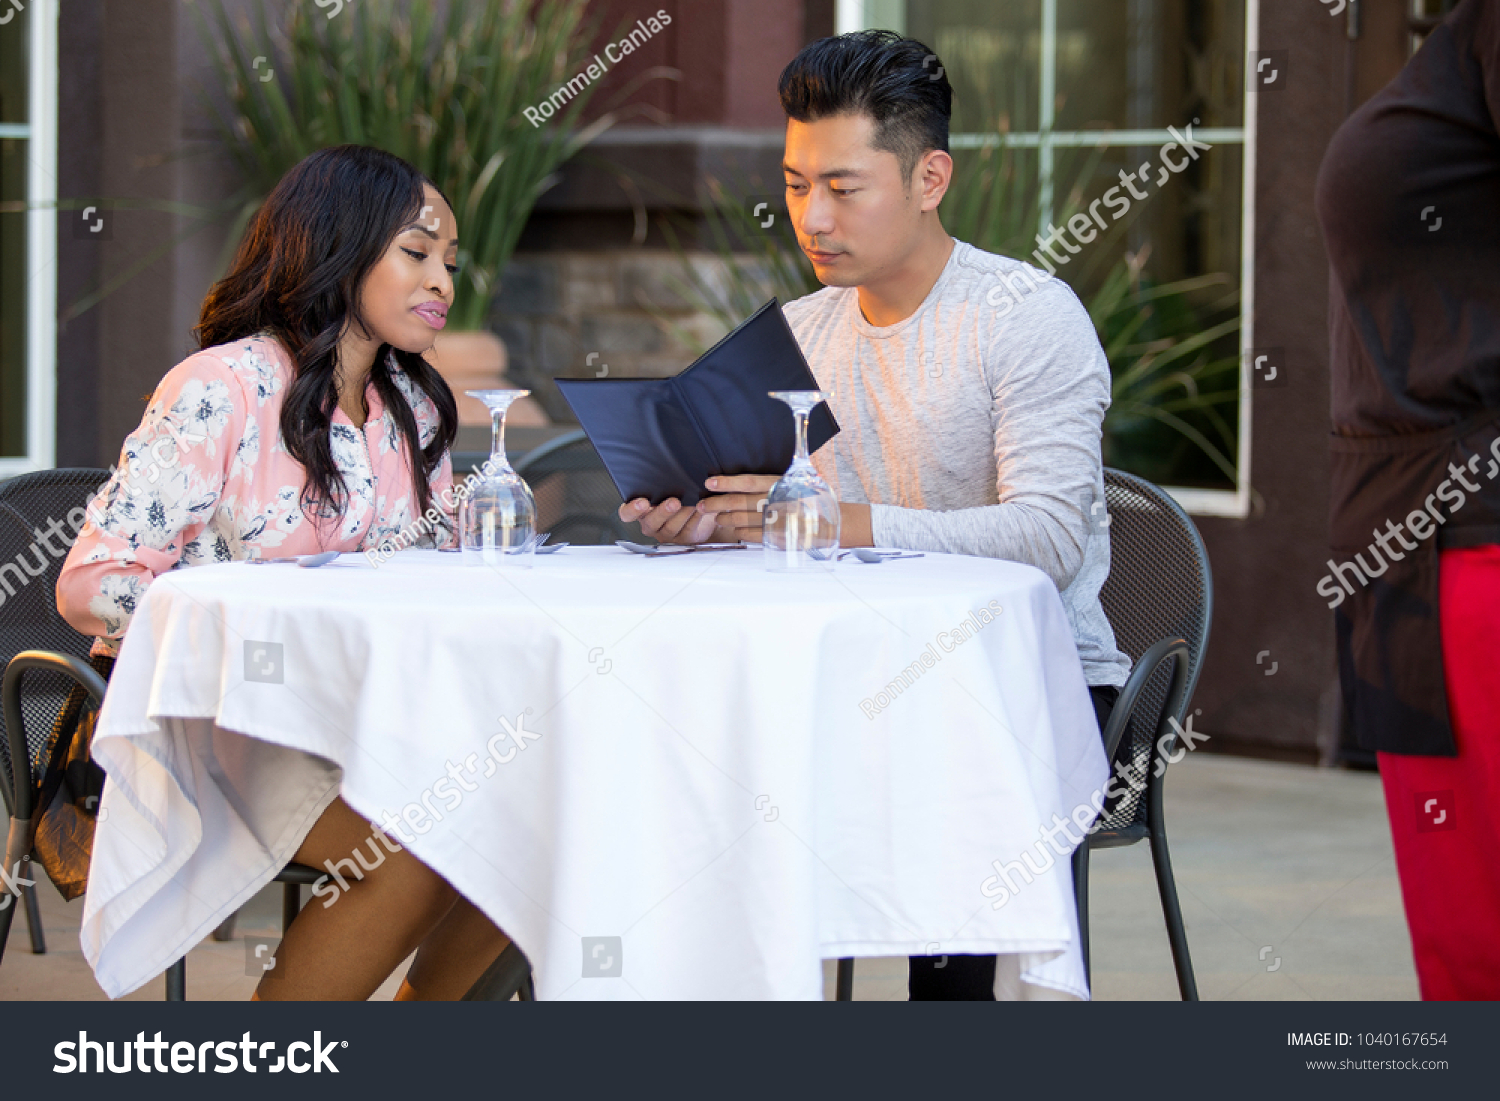 table outdoor table outdoor interracial outdoor